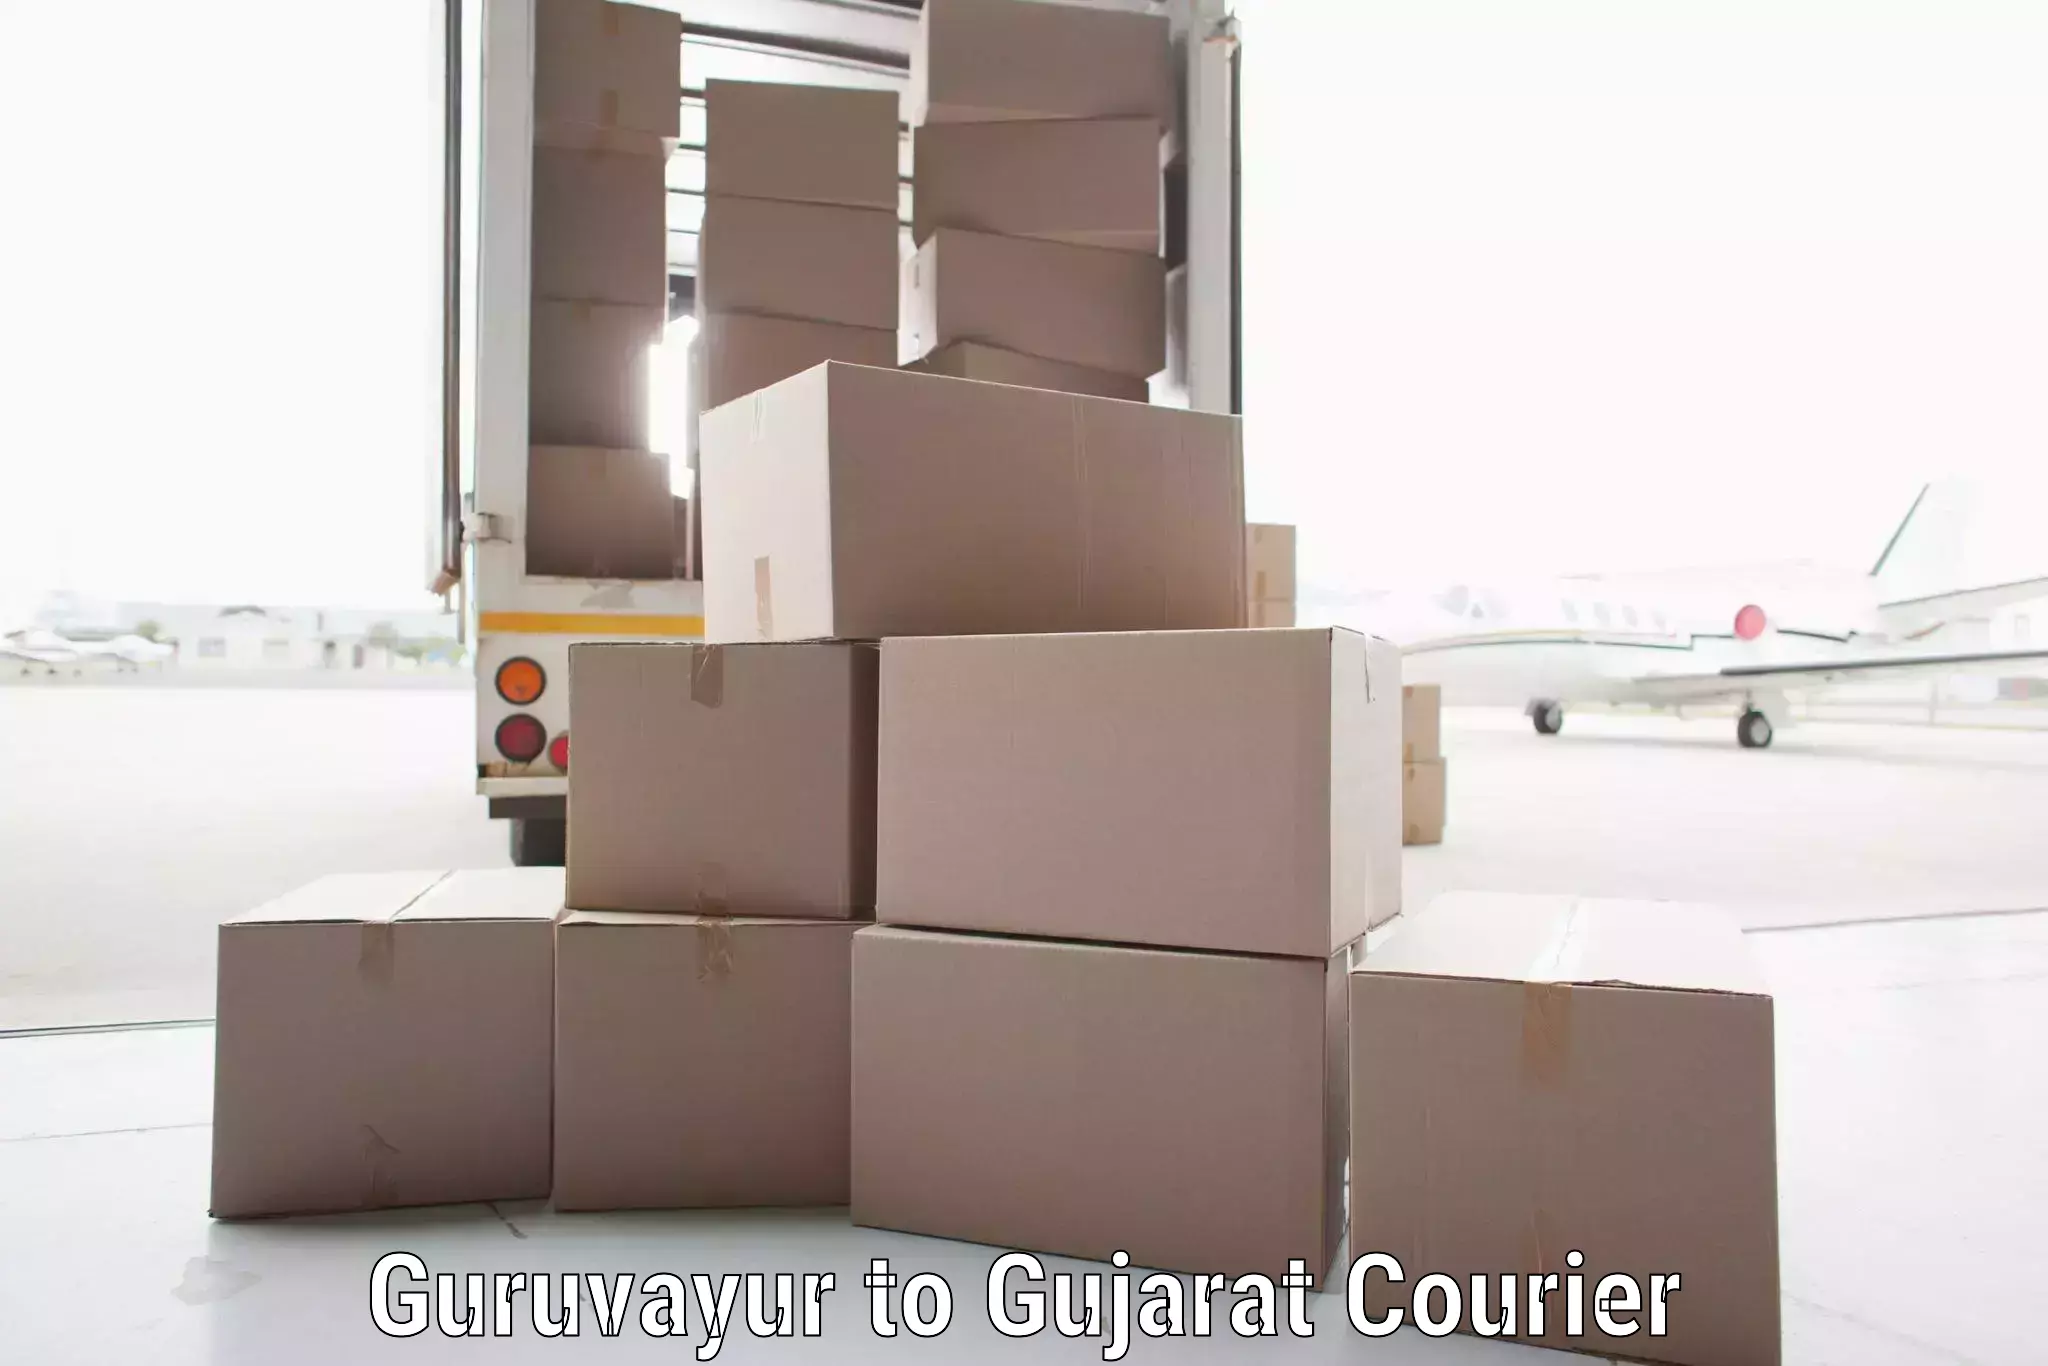 Package delivery network Guruvayur to Lunawada